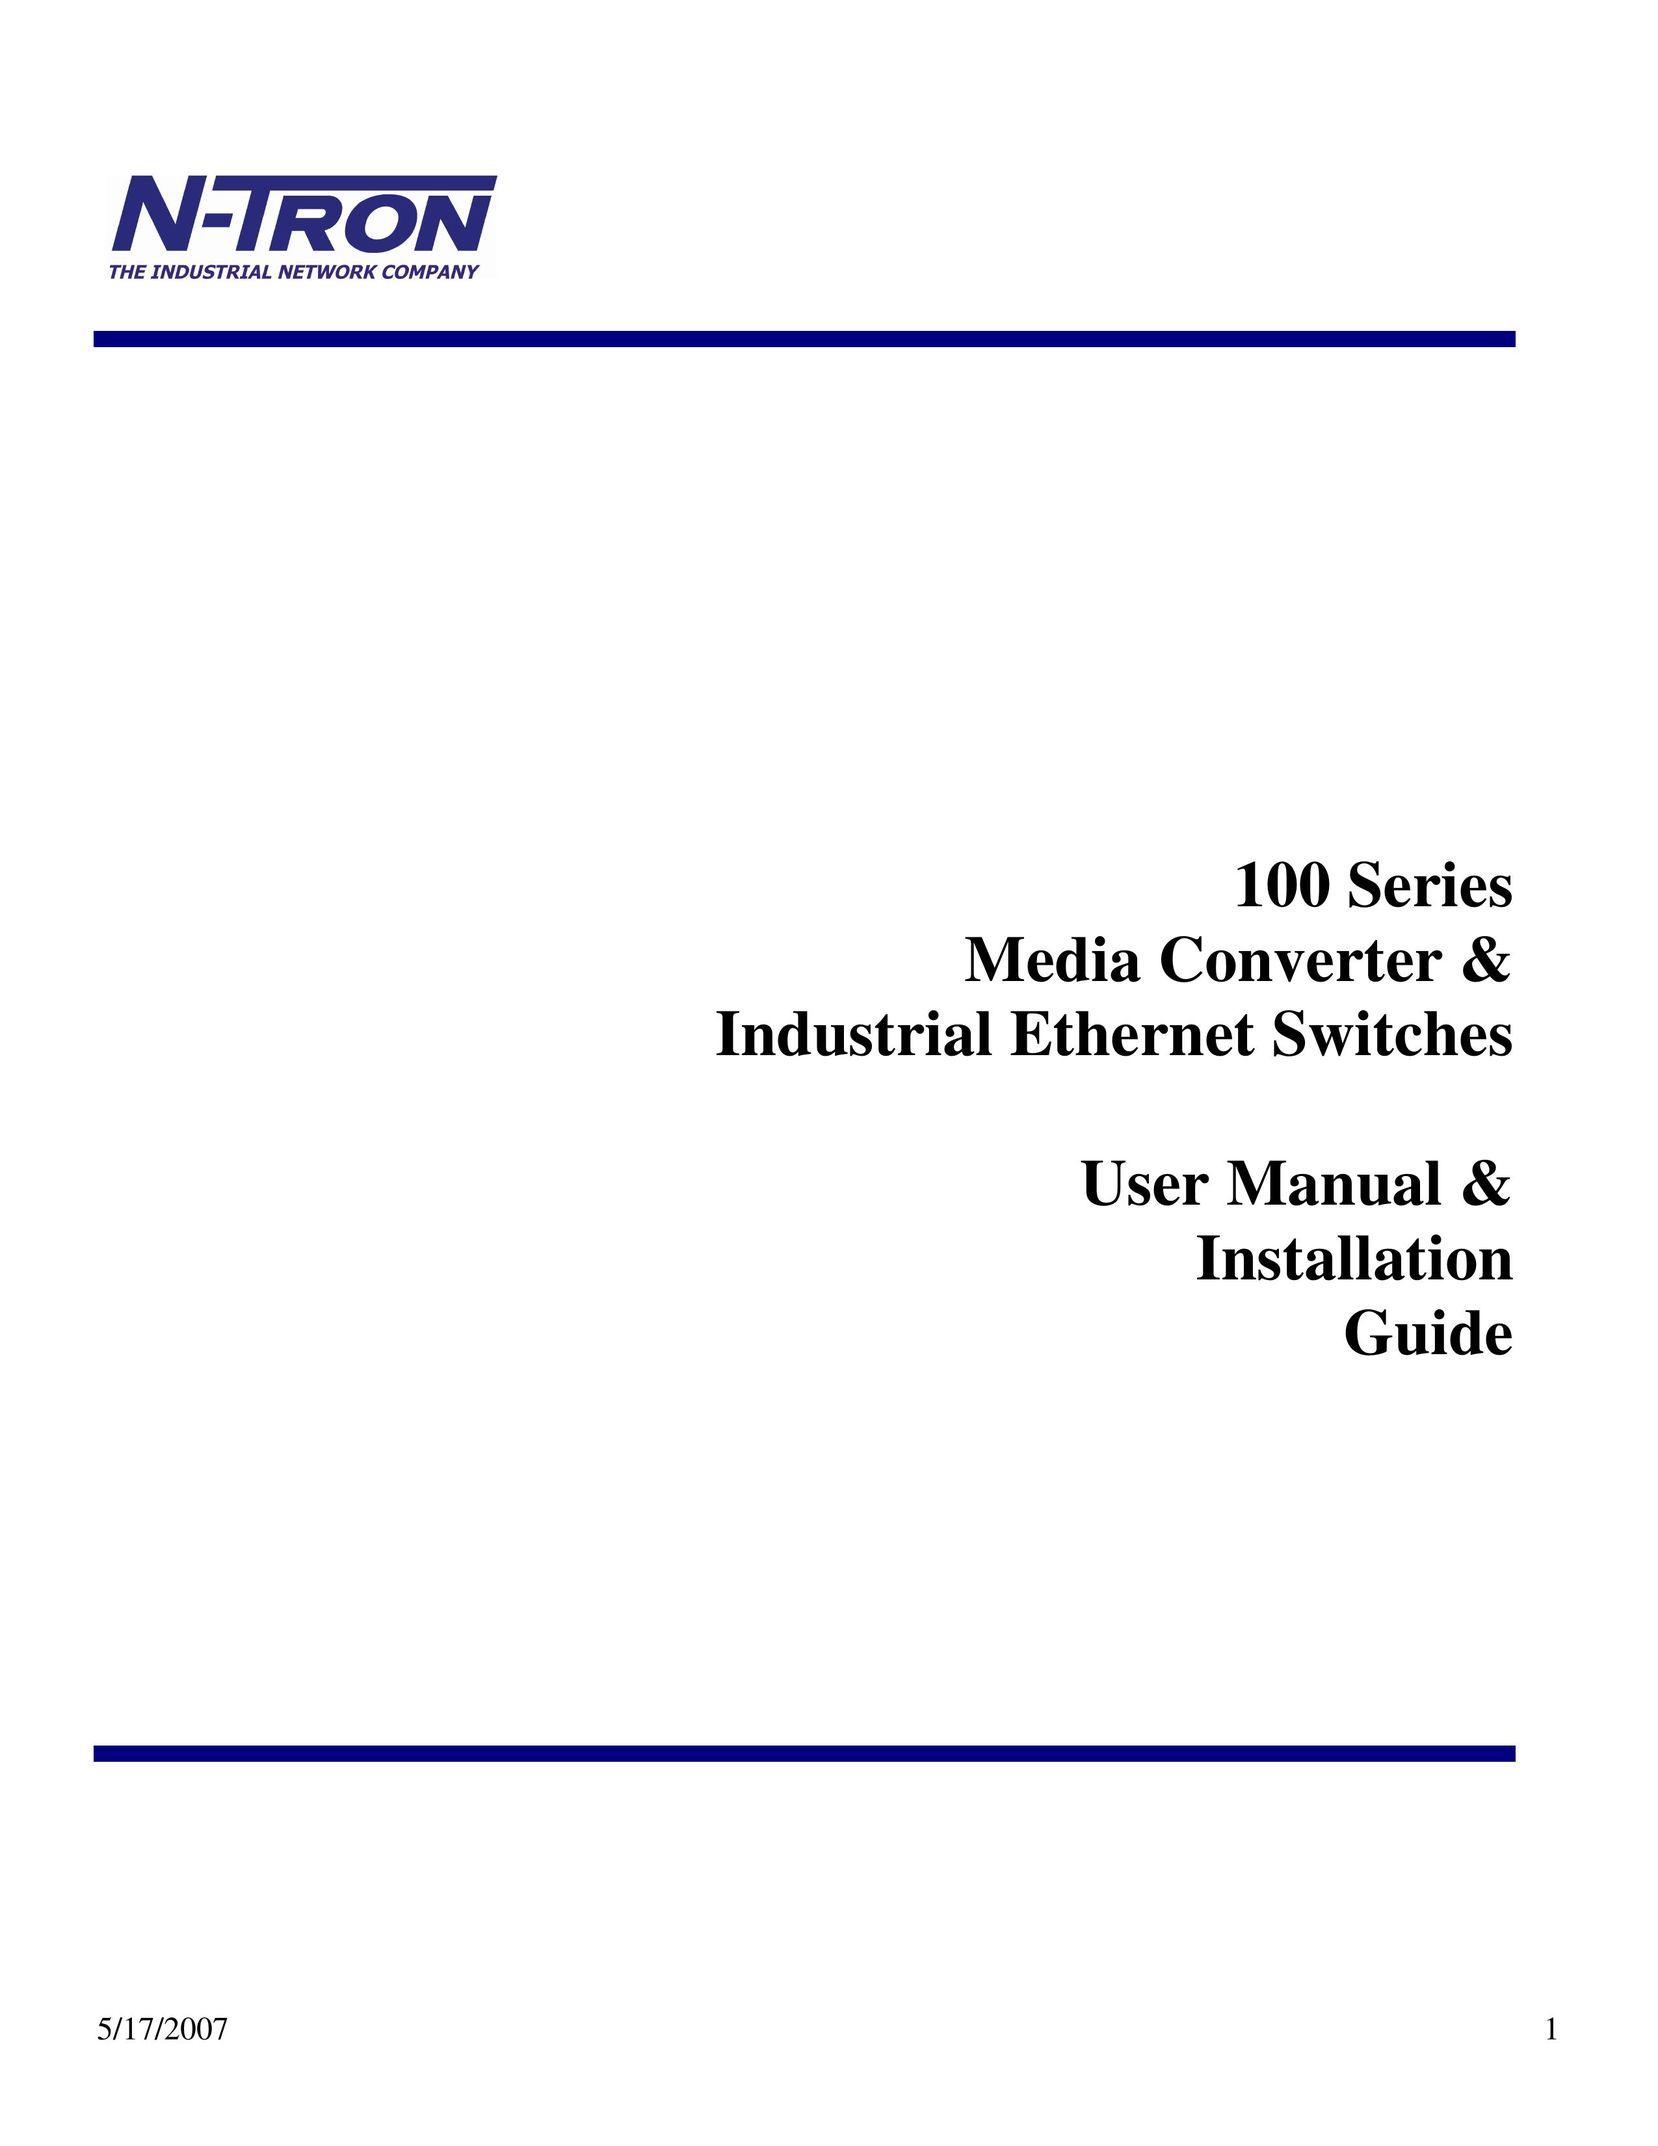 N-Tron 100 Series Switch User Manual